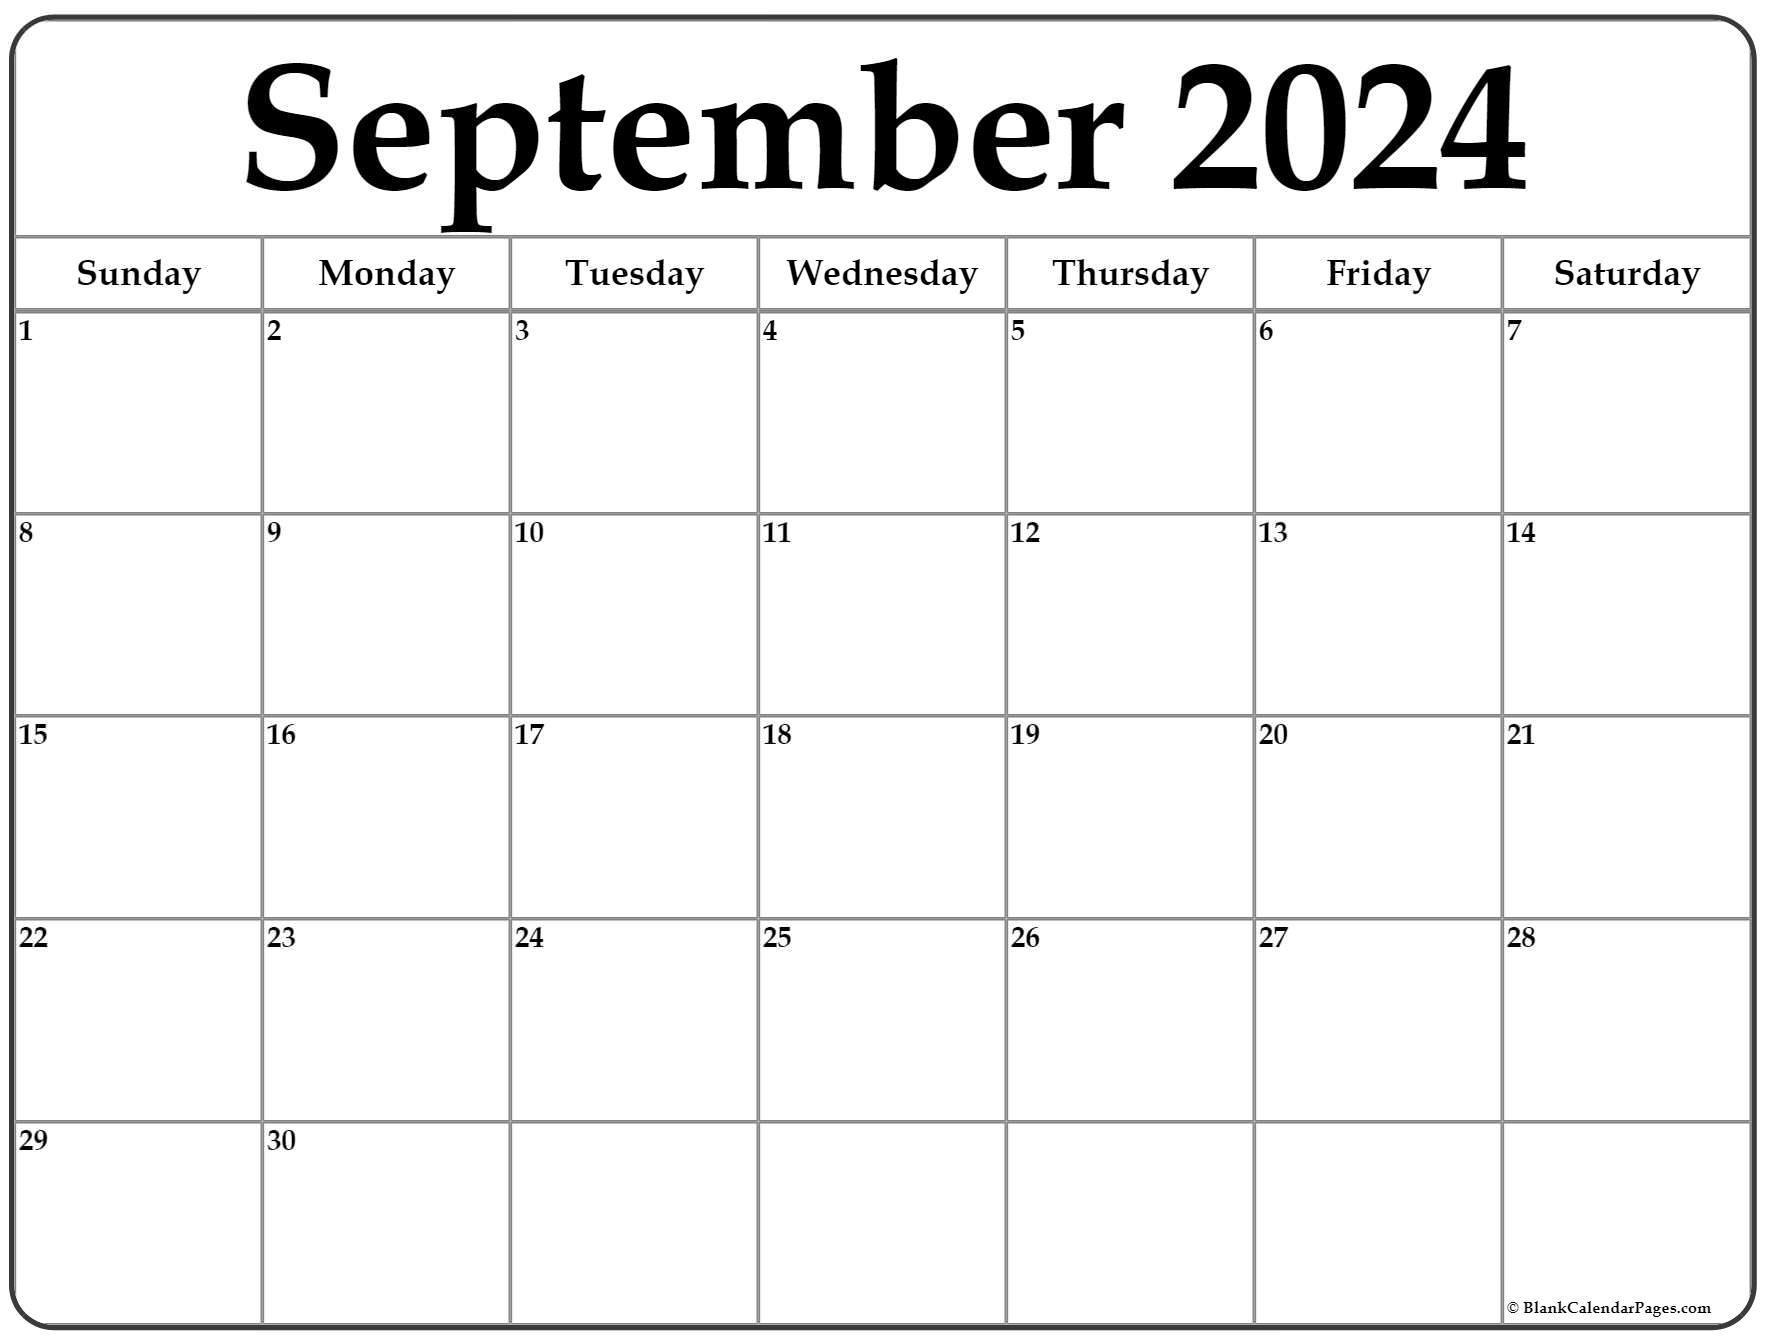 Sept 2022 Printable Calendar September 2022 Calendar | Free Printable Calendar Templates